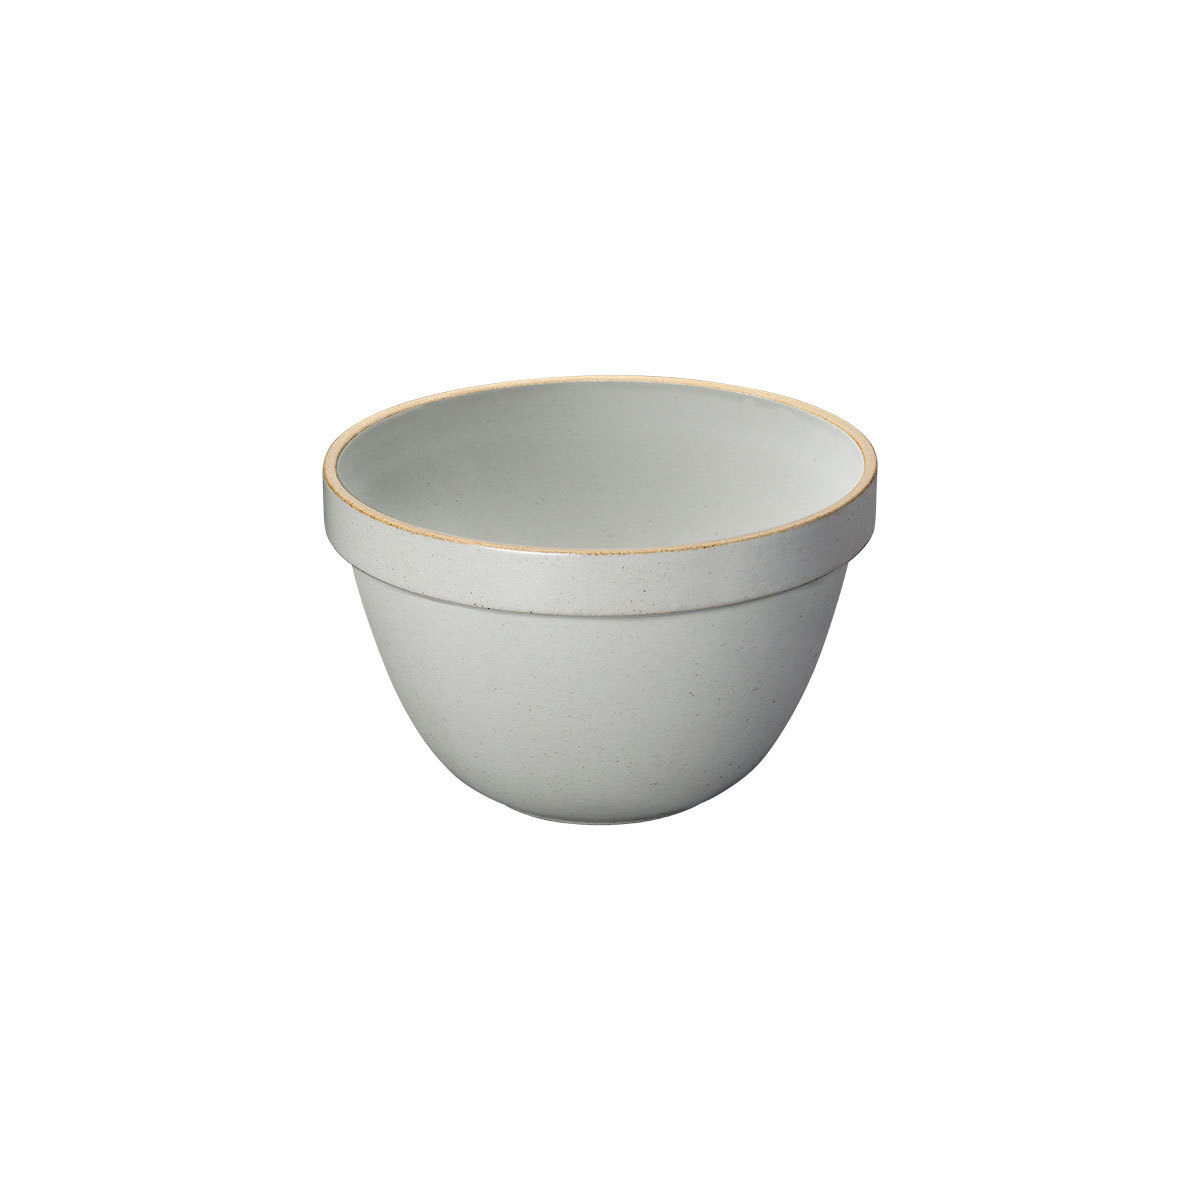 Hasami Porcelain ハサミポーセリン HPM046 Bowl Round 145 mm Gloss Gray 波佐見焼 白 磁器 ボウル ギフト プレゼント STAYHOME